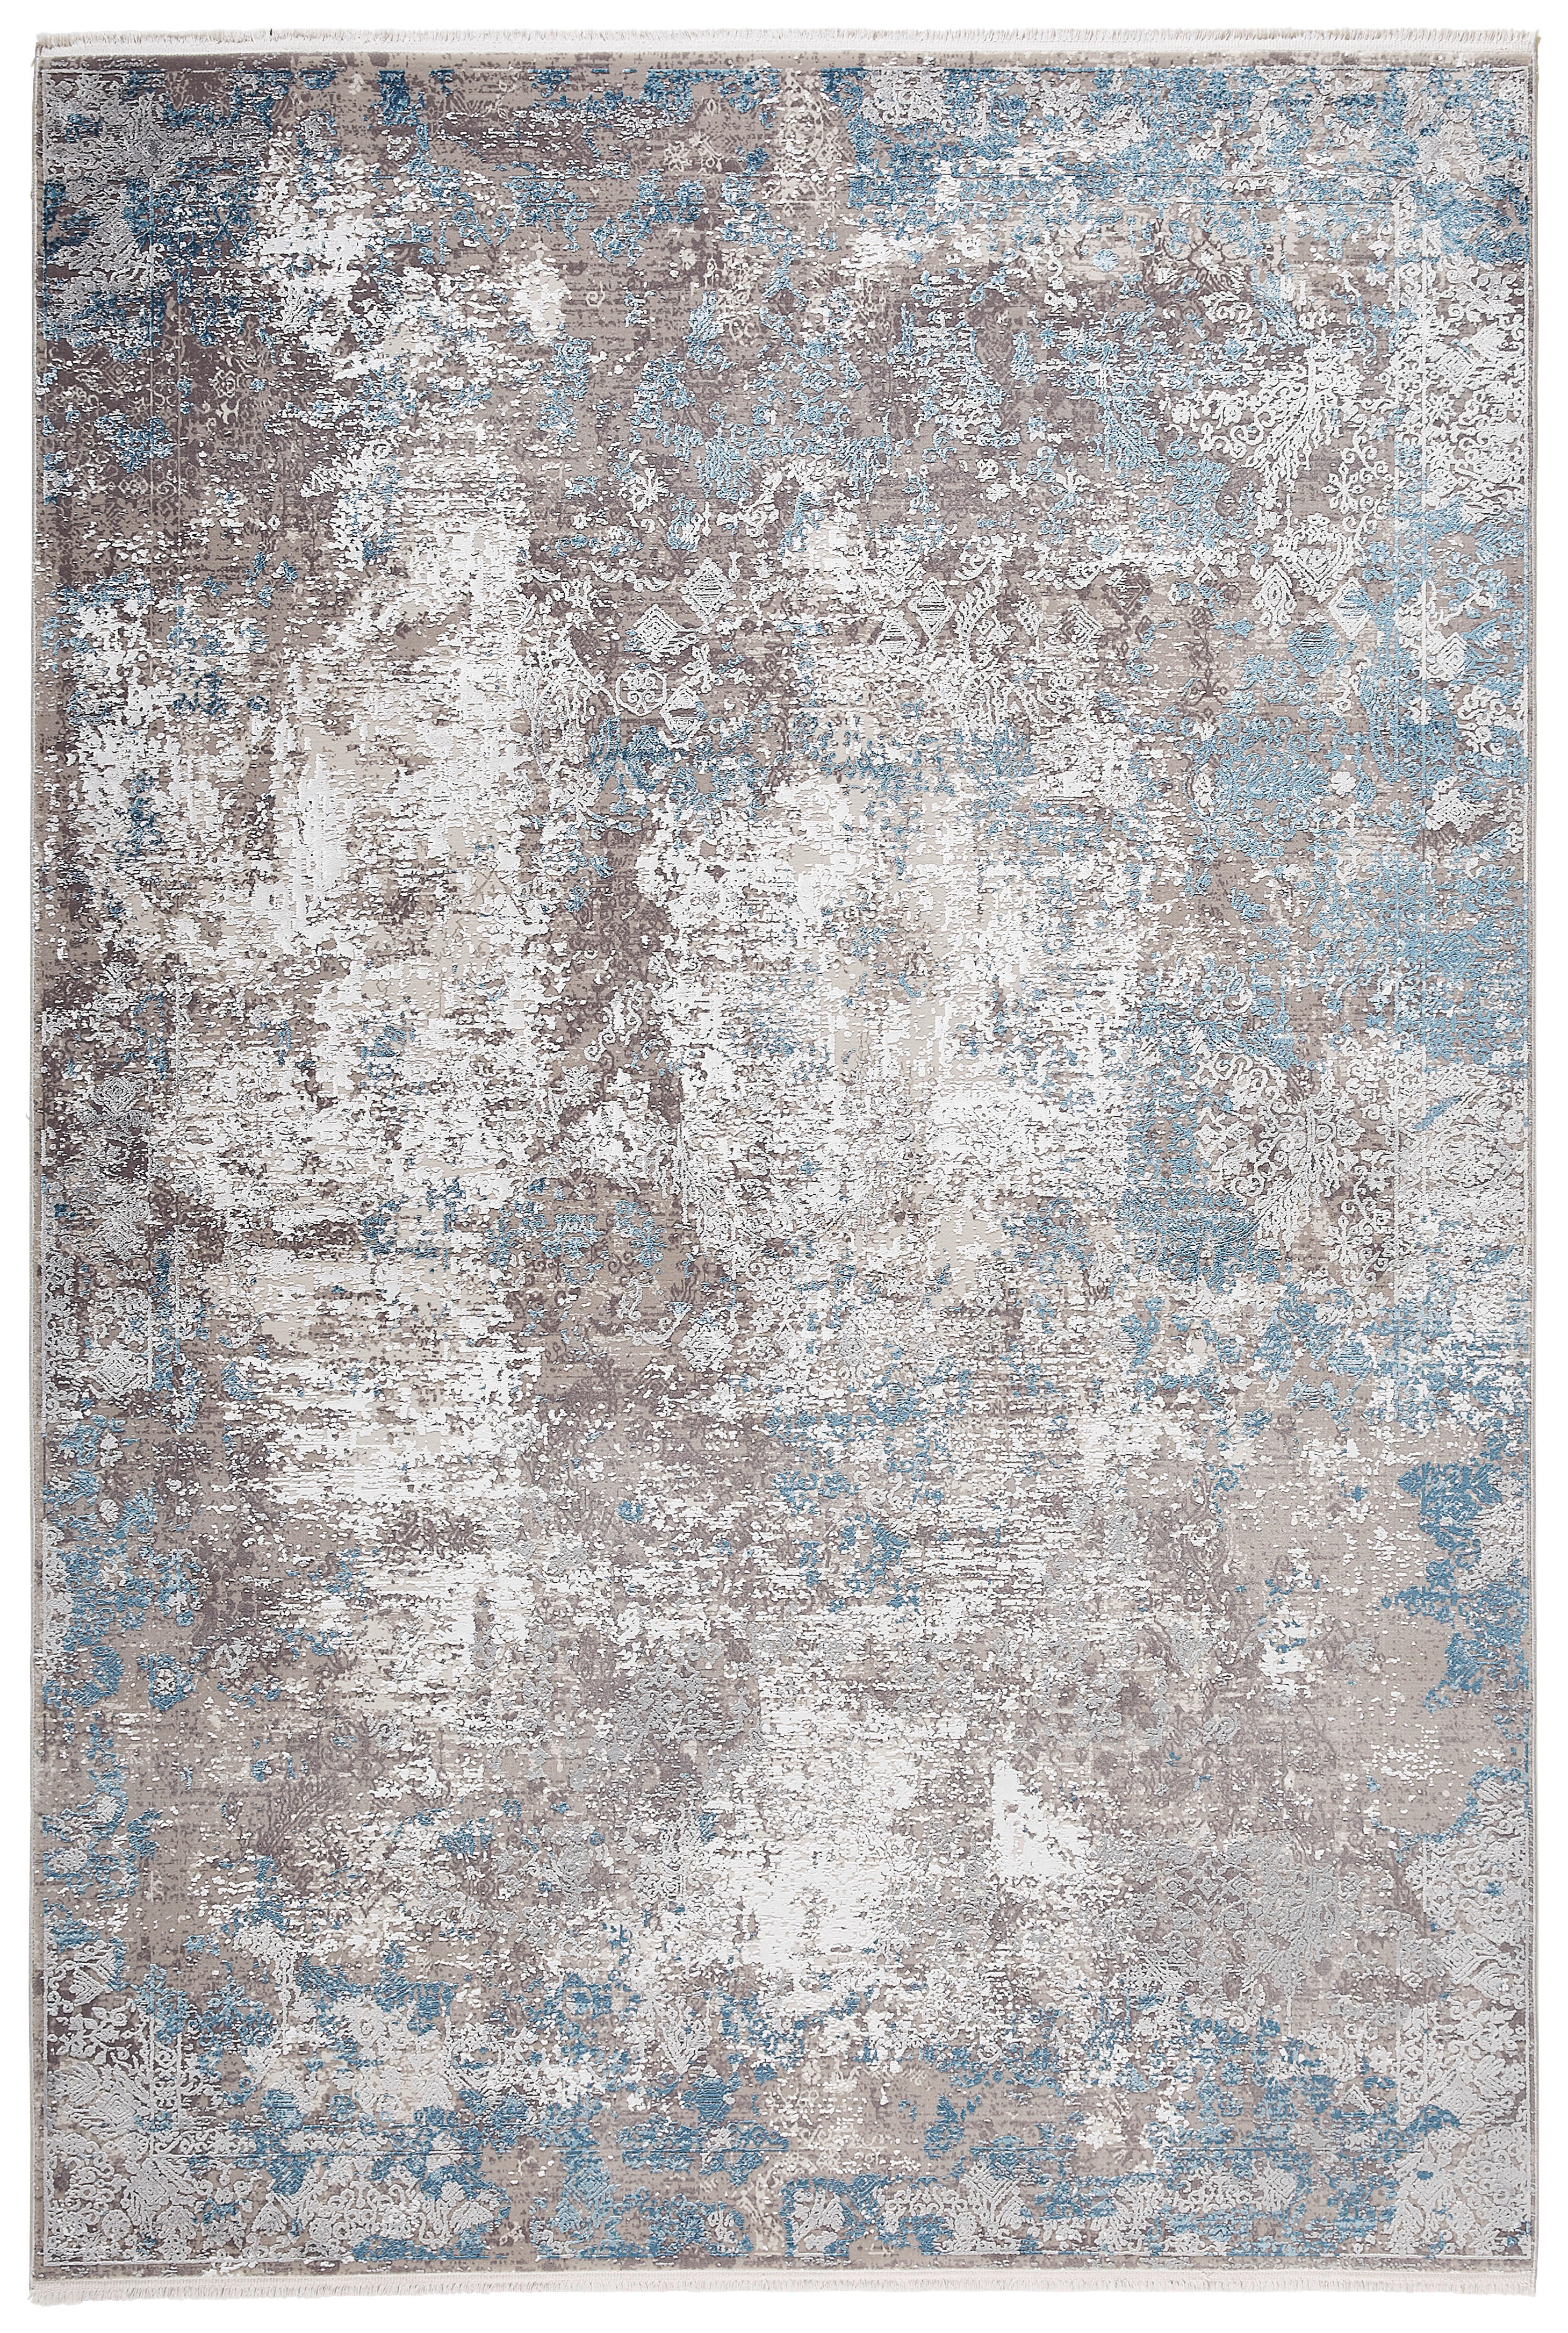 VINTAGE-TEPPICH  240/290 cm  Blau   - Blau, Design, Textil (240/290cm) - Dieter Knoll